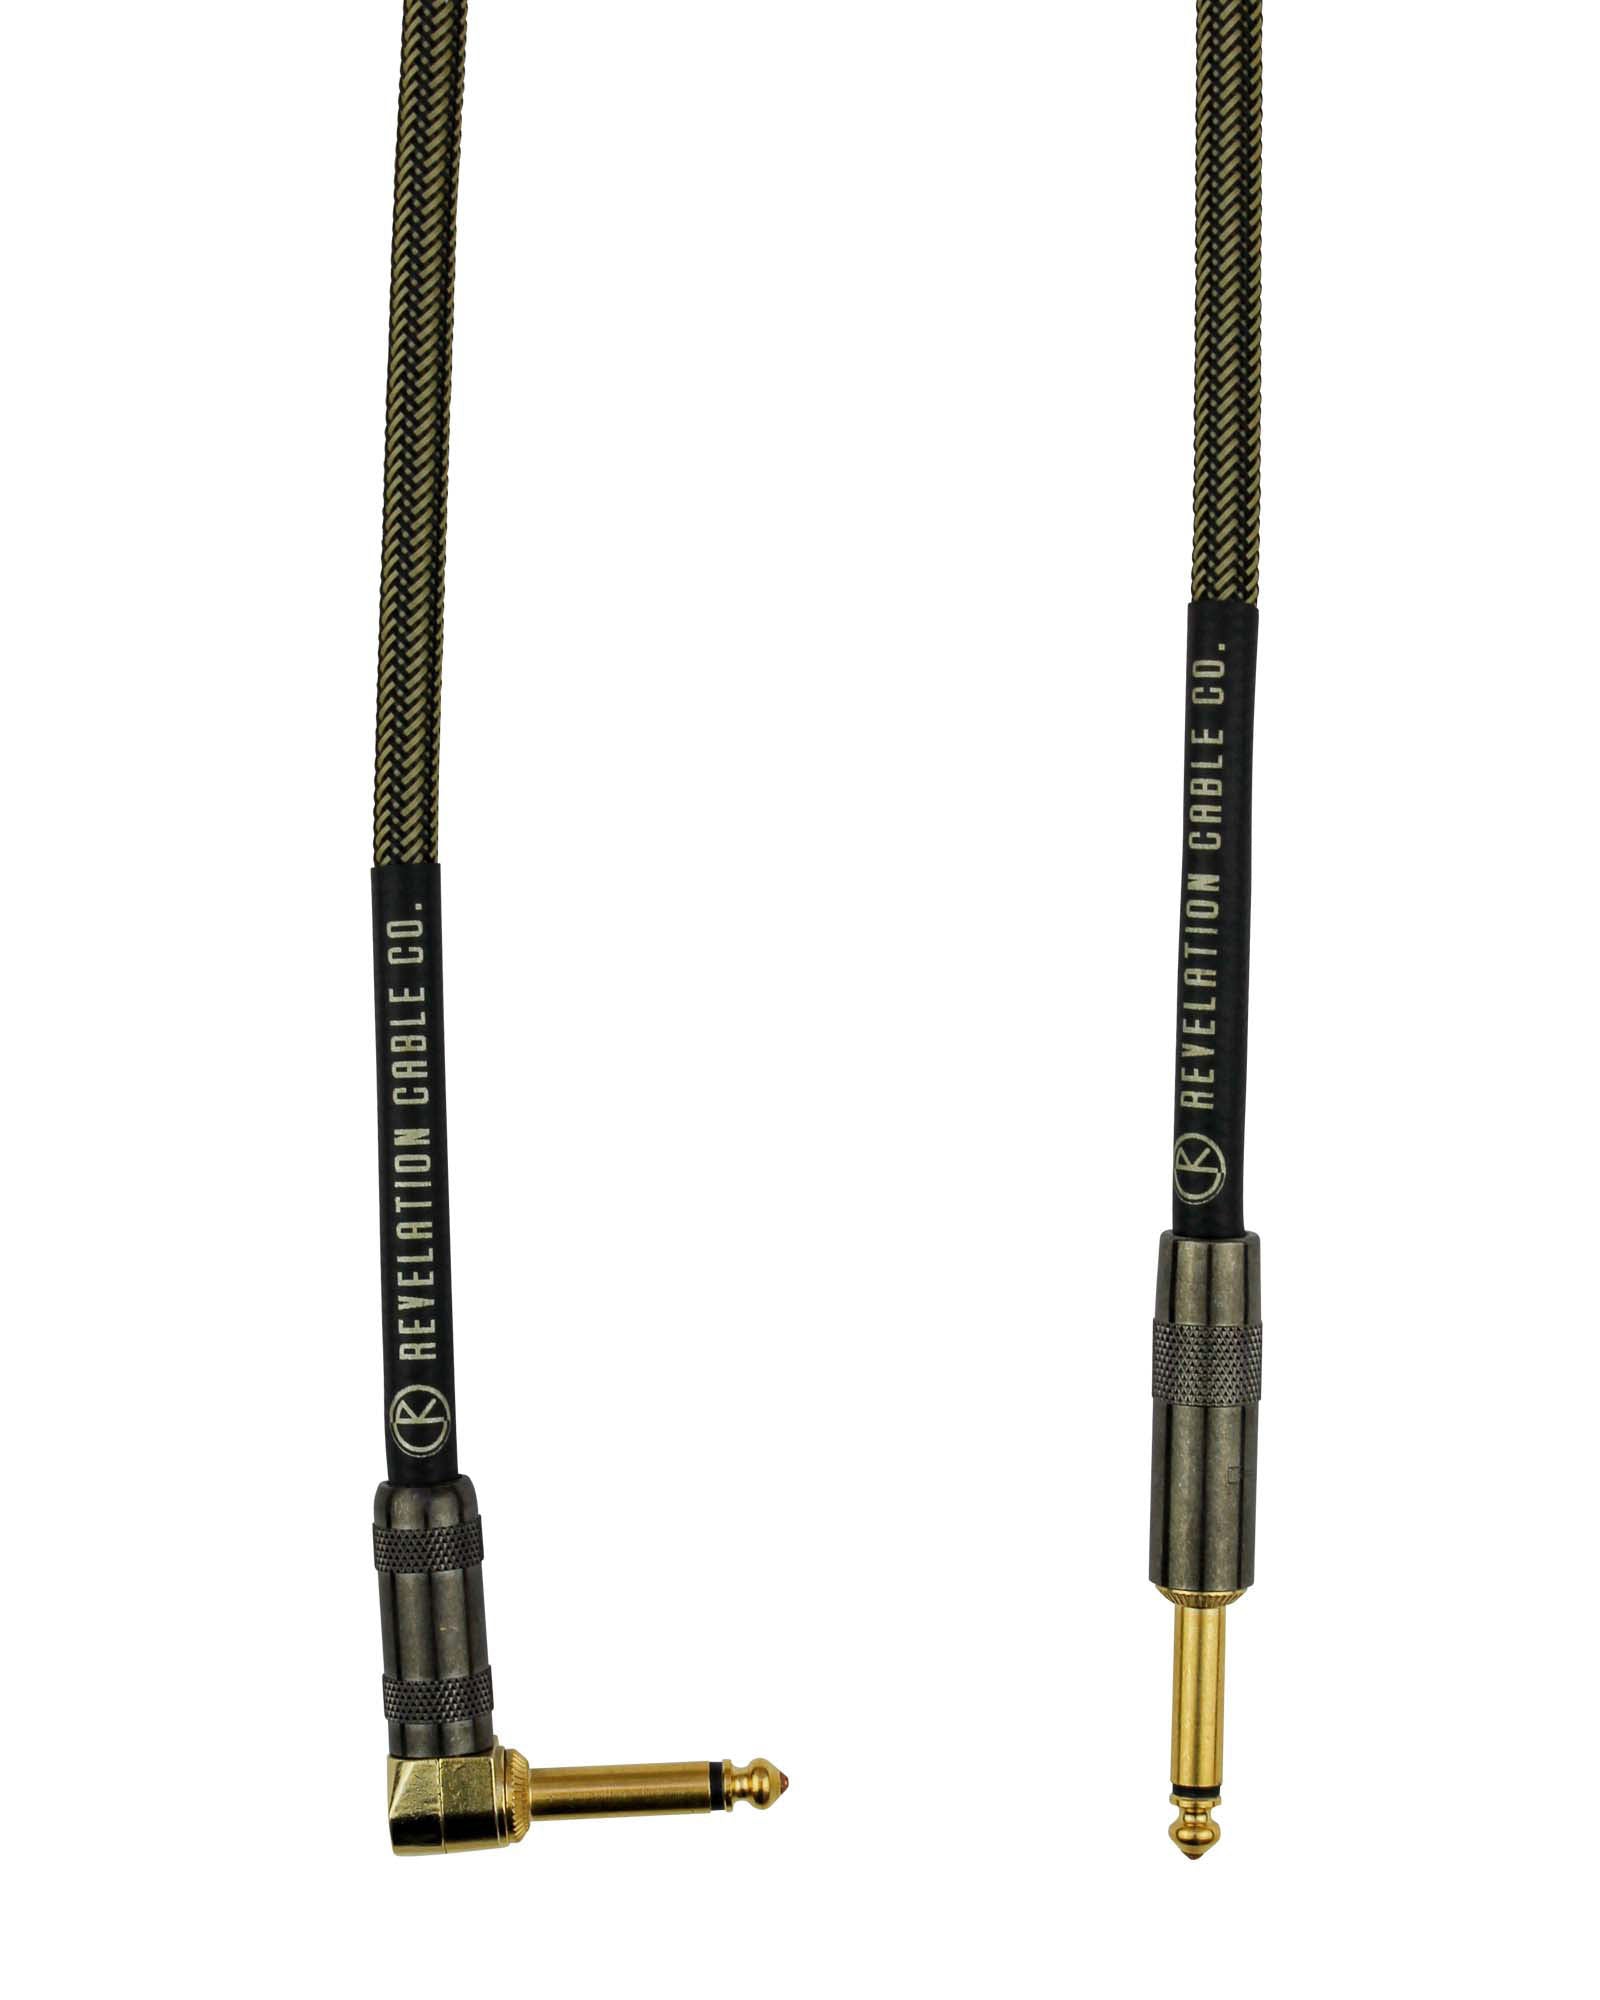 Revelation Cable Co. Black Gold Tweed 10' Premium Instrument Cable